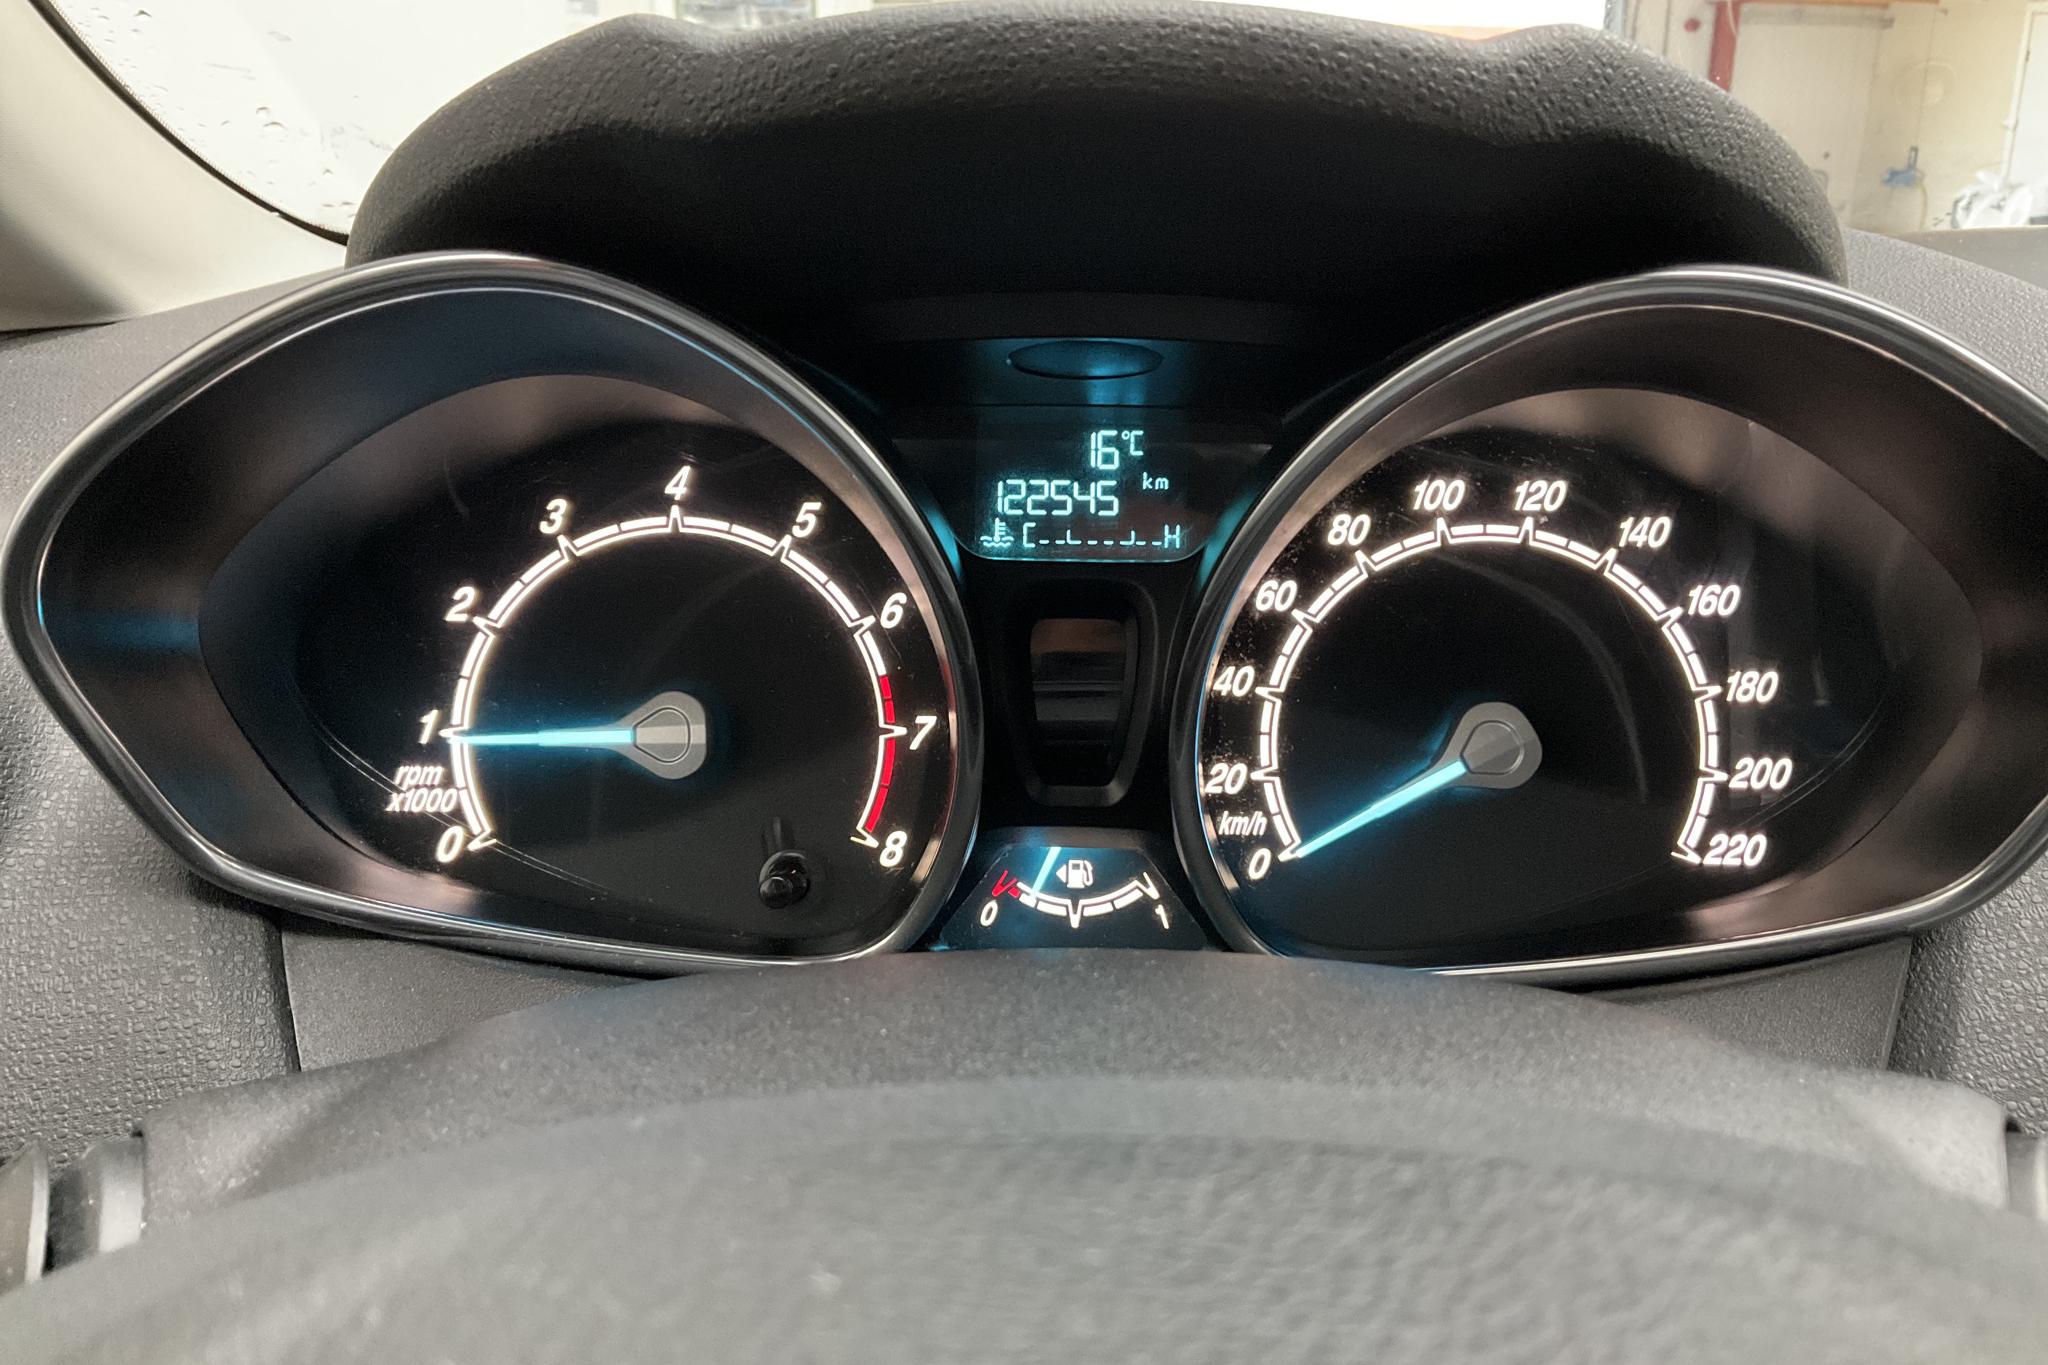 Ford Fiesta 1.0 5dr (80hk) - 122 550 km - Manual - red - 2016